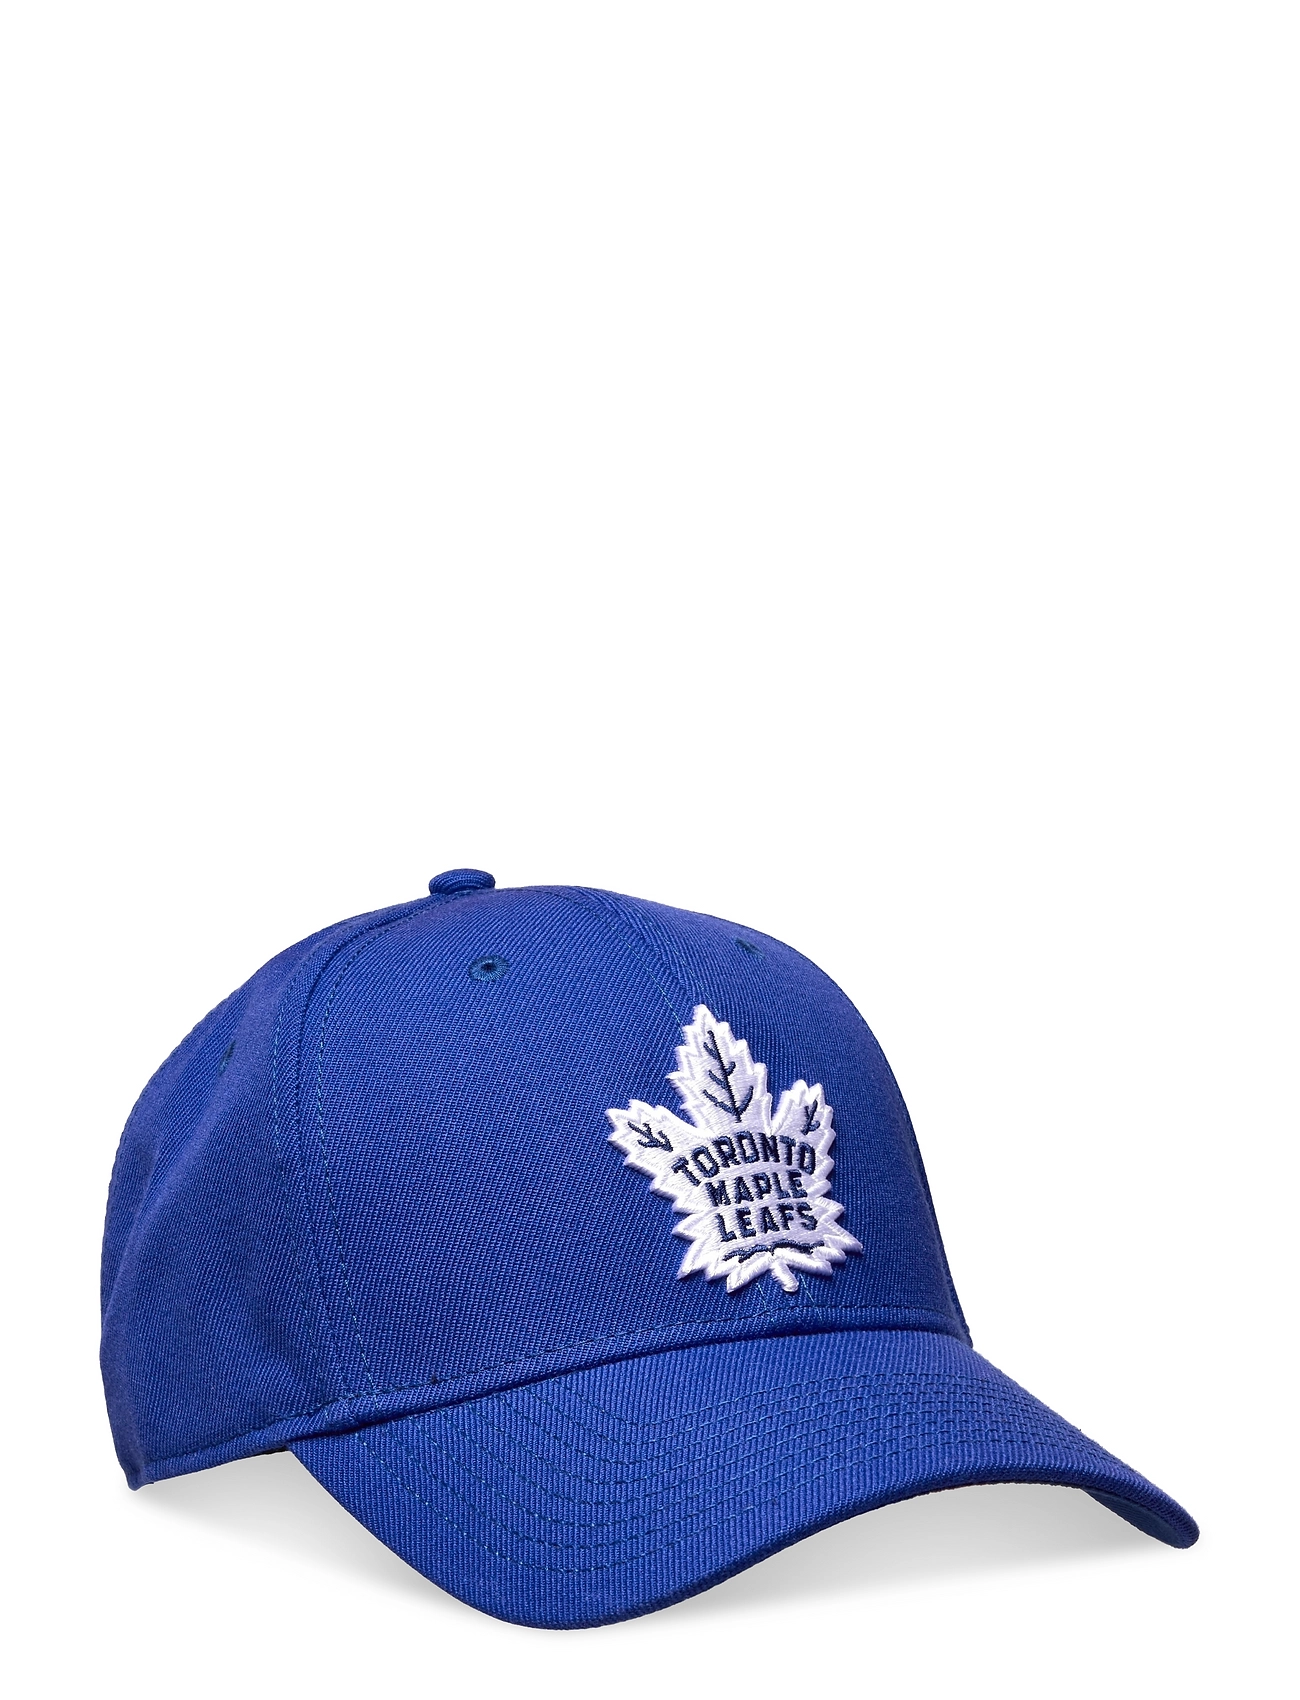 Stadium - Toronto Maple Leafs Accessories Headwear Caps Blue American Needle